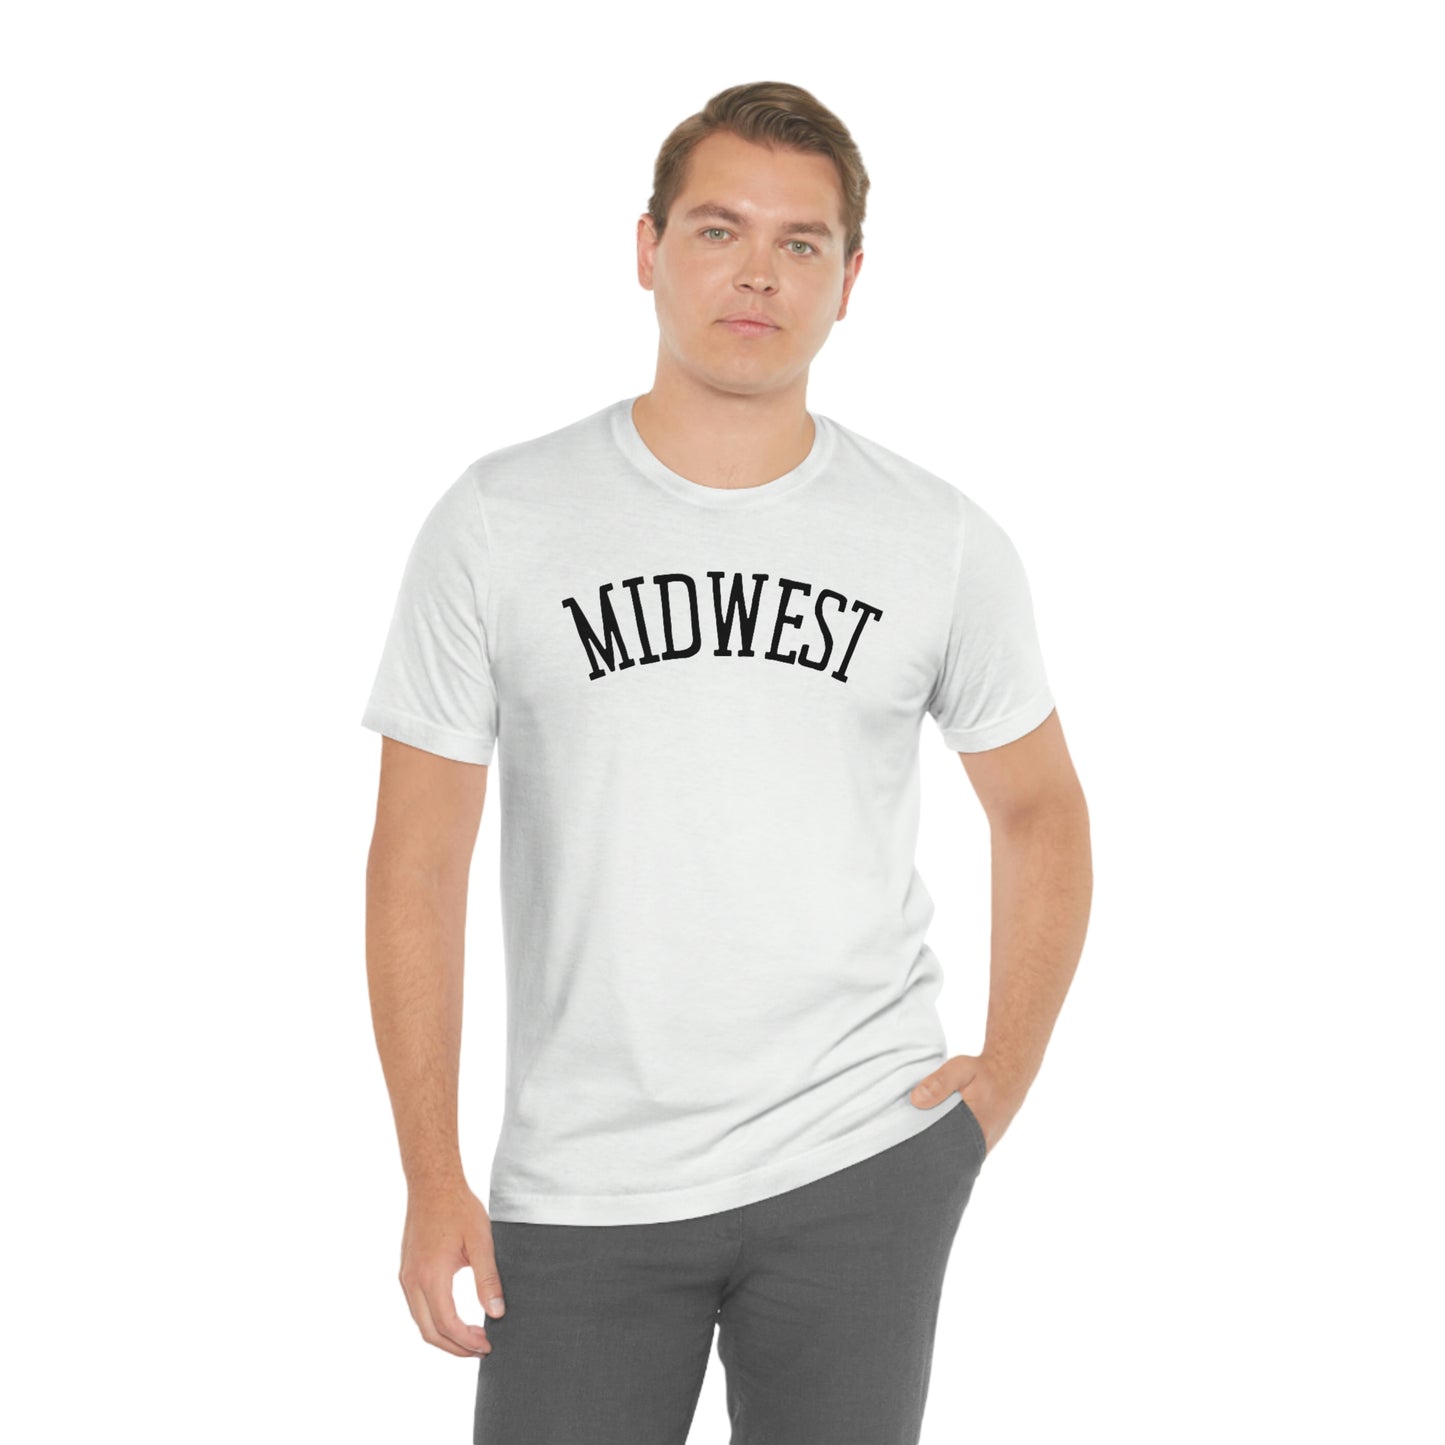 "Midwest" Unisex Jersey Short Sleeve Tee